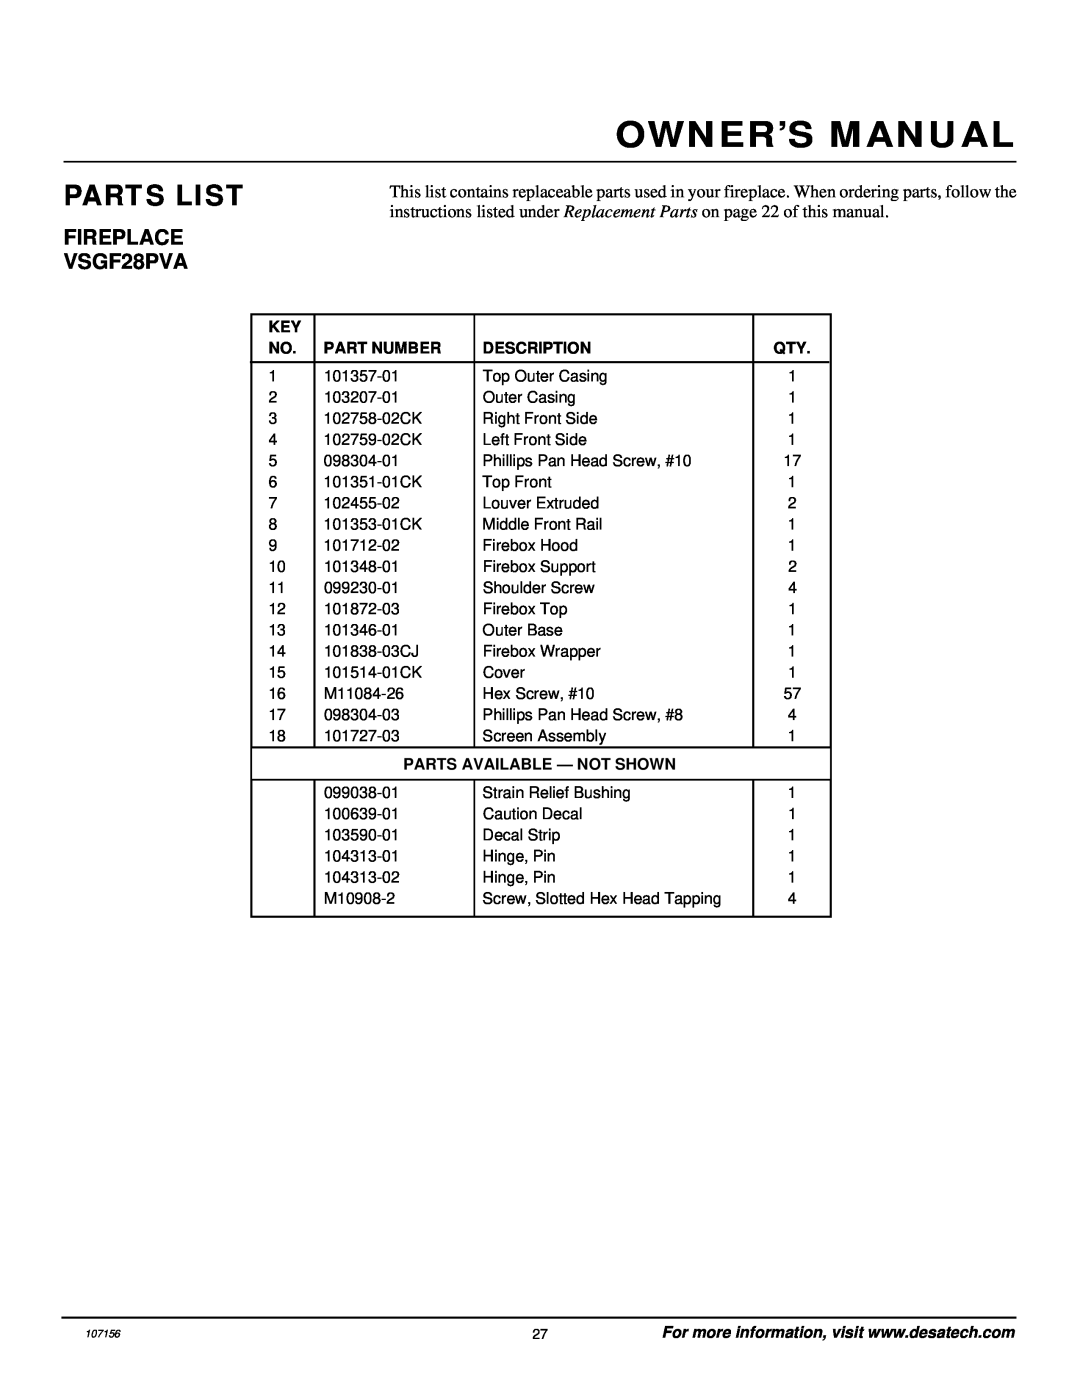 Vanguard Heating VSGF28PTC Parts List, FIREPLACE VSGF28PVA, Part Number, Description, Parts Available - Not Shown 